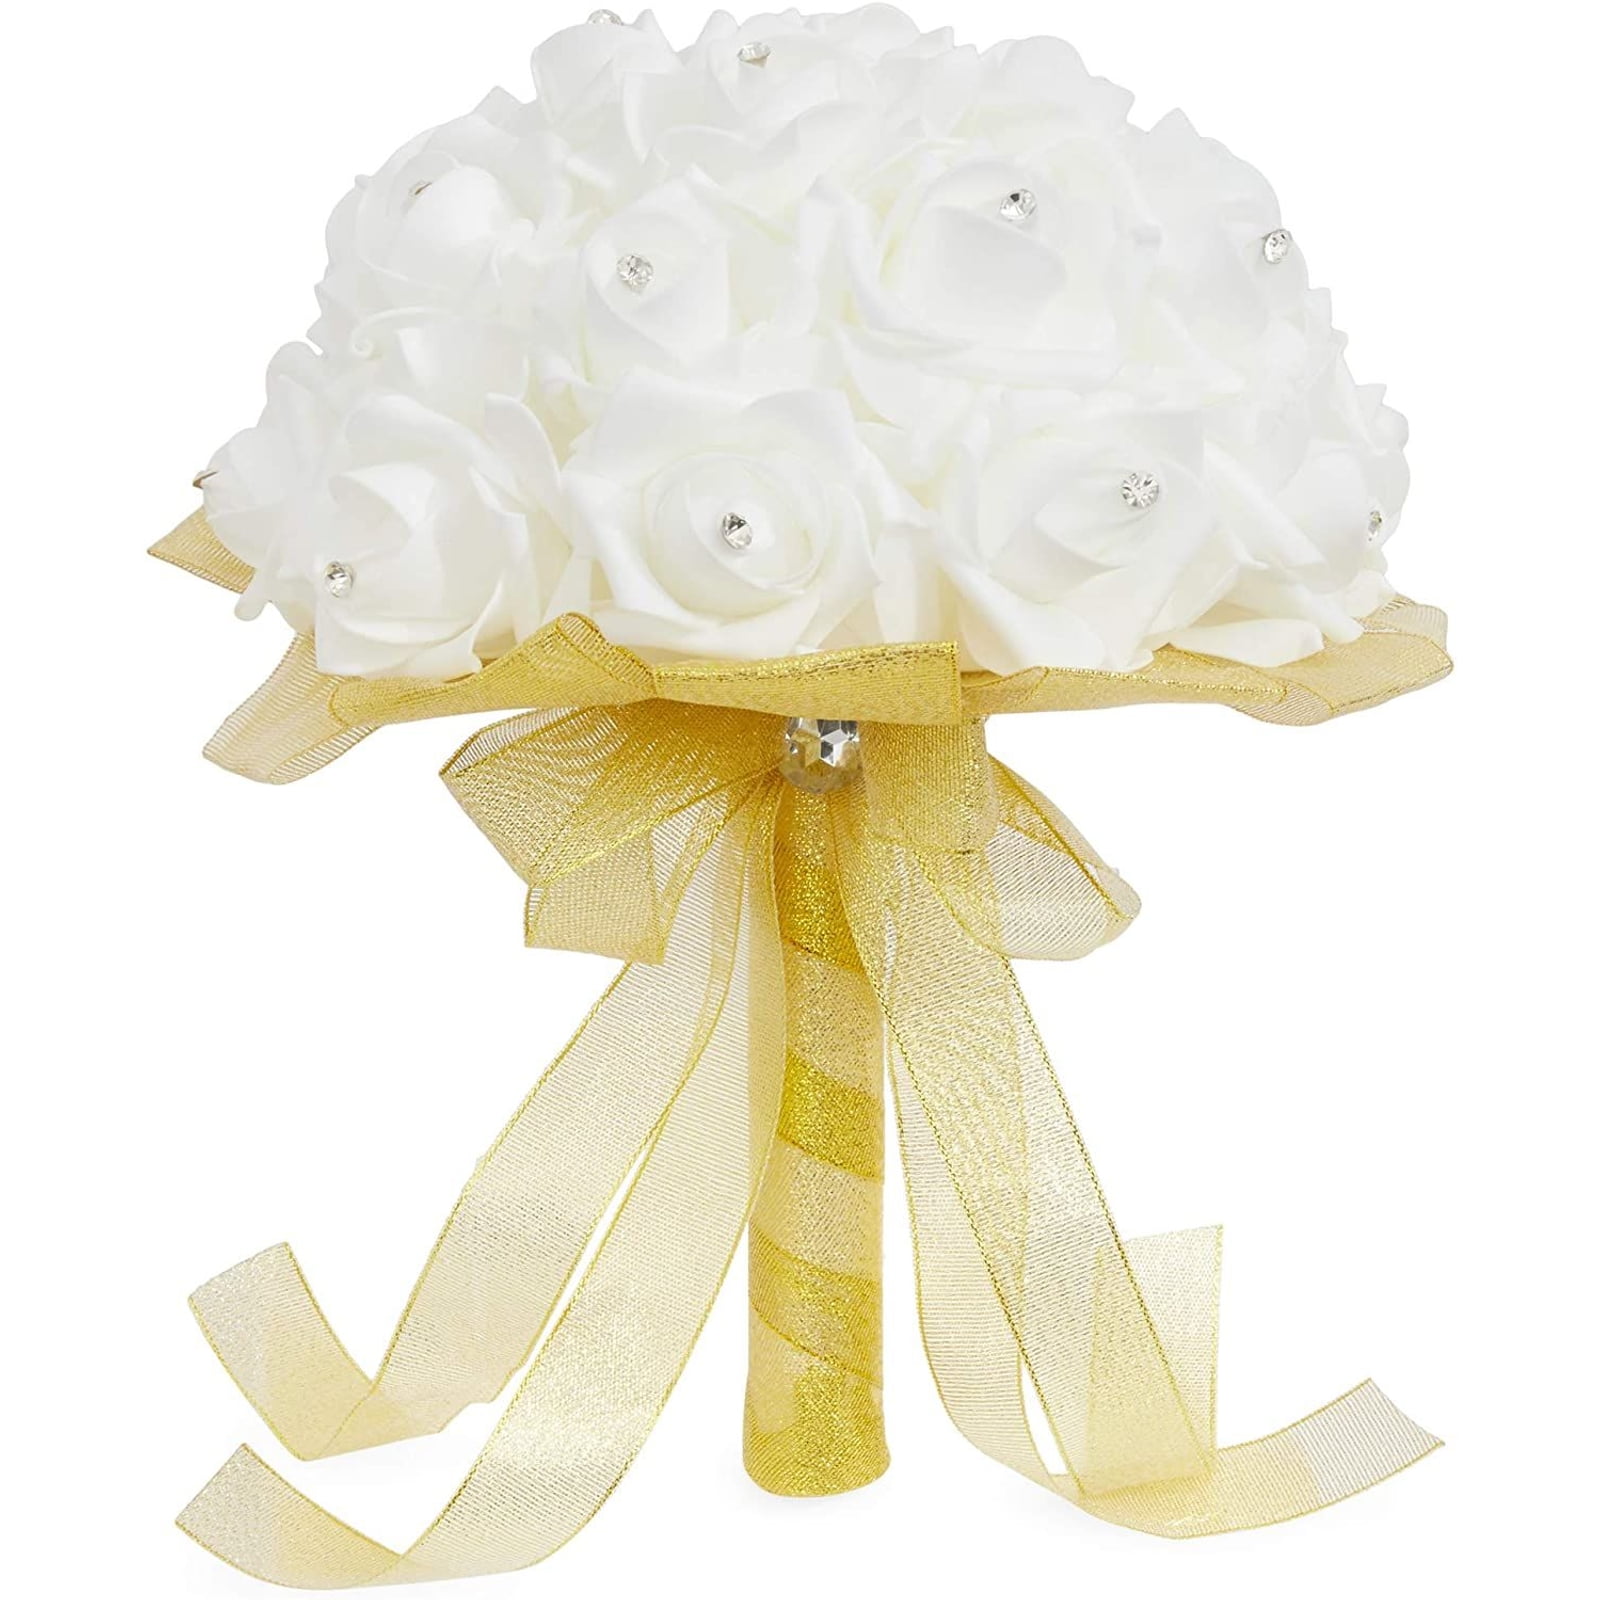 Plain Bunch White Silk Rose Handtied Posy Wedding Bouquet Flowers 18 Stems 